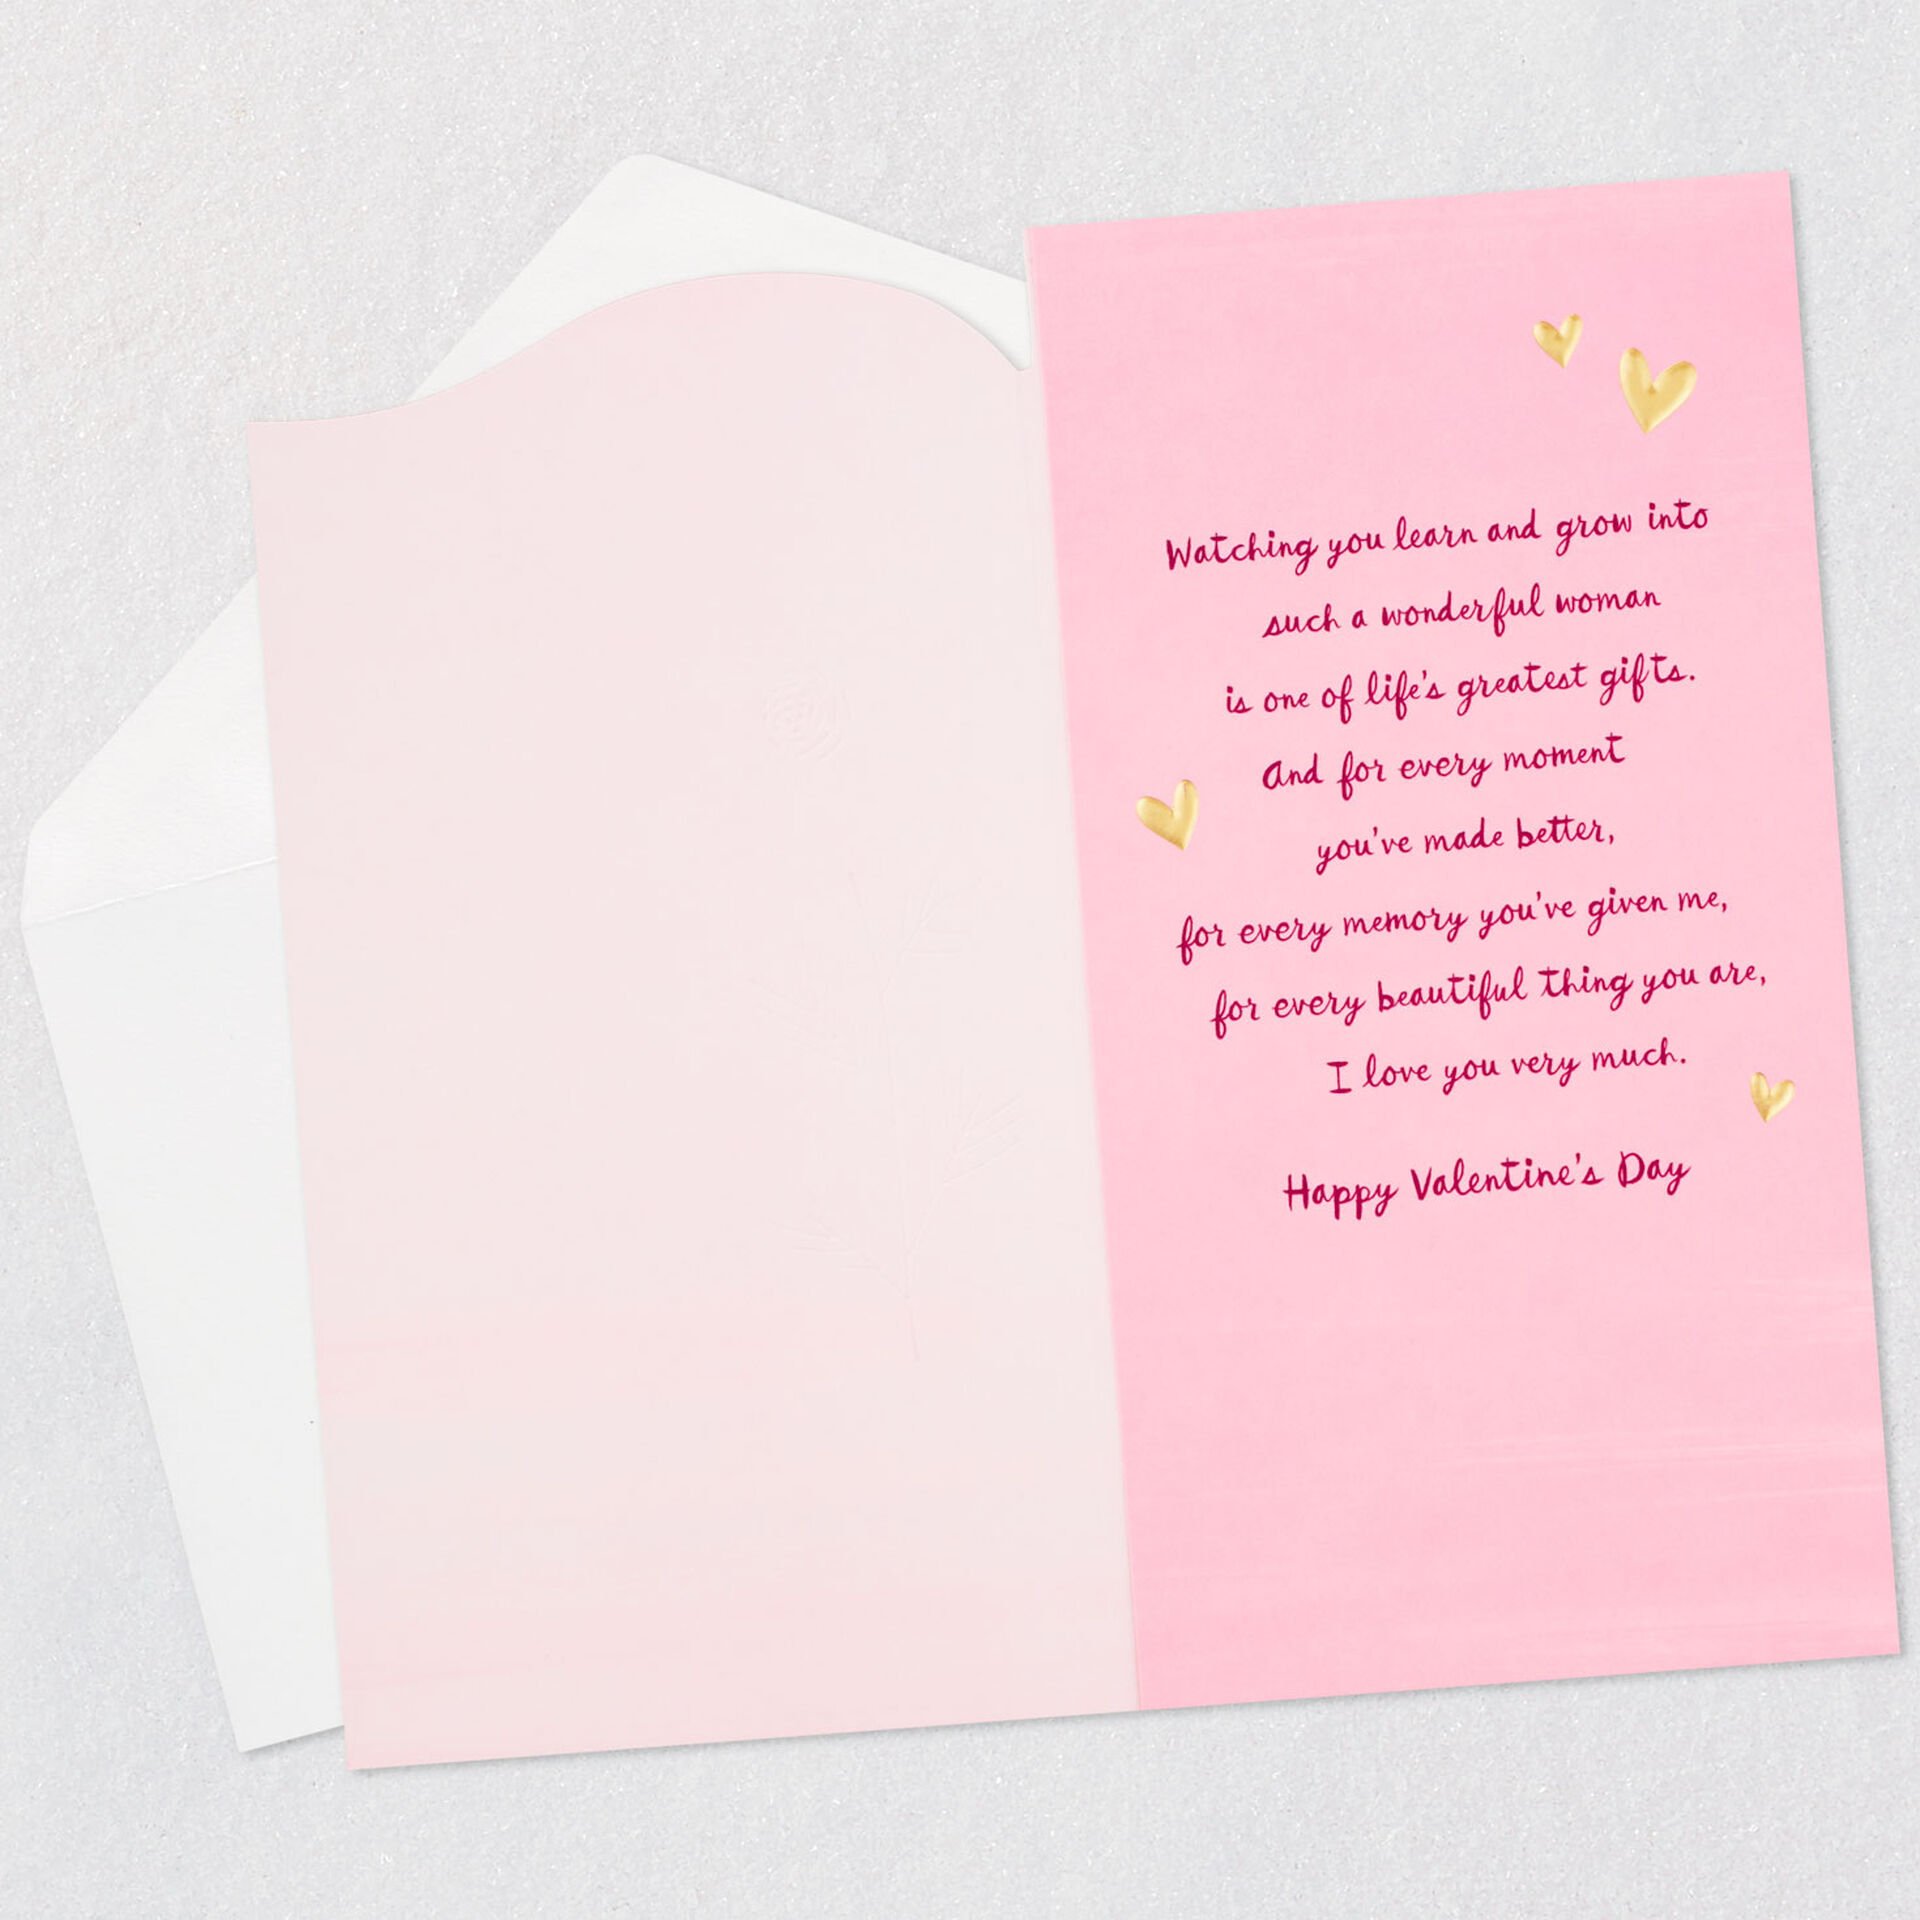 Flower-in-Vase-on-Pink-Valentines-Day-Card-for-Daughter_399VSI8003_03.jpeg